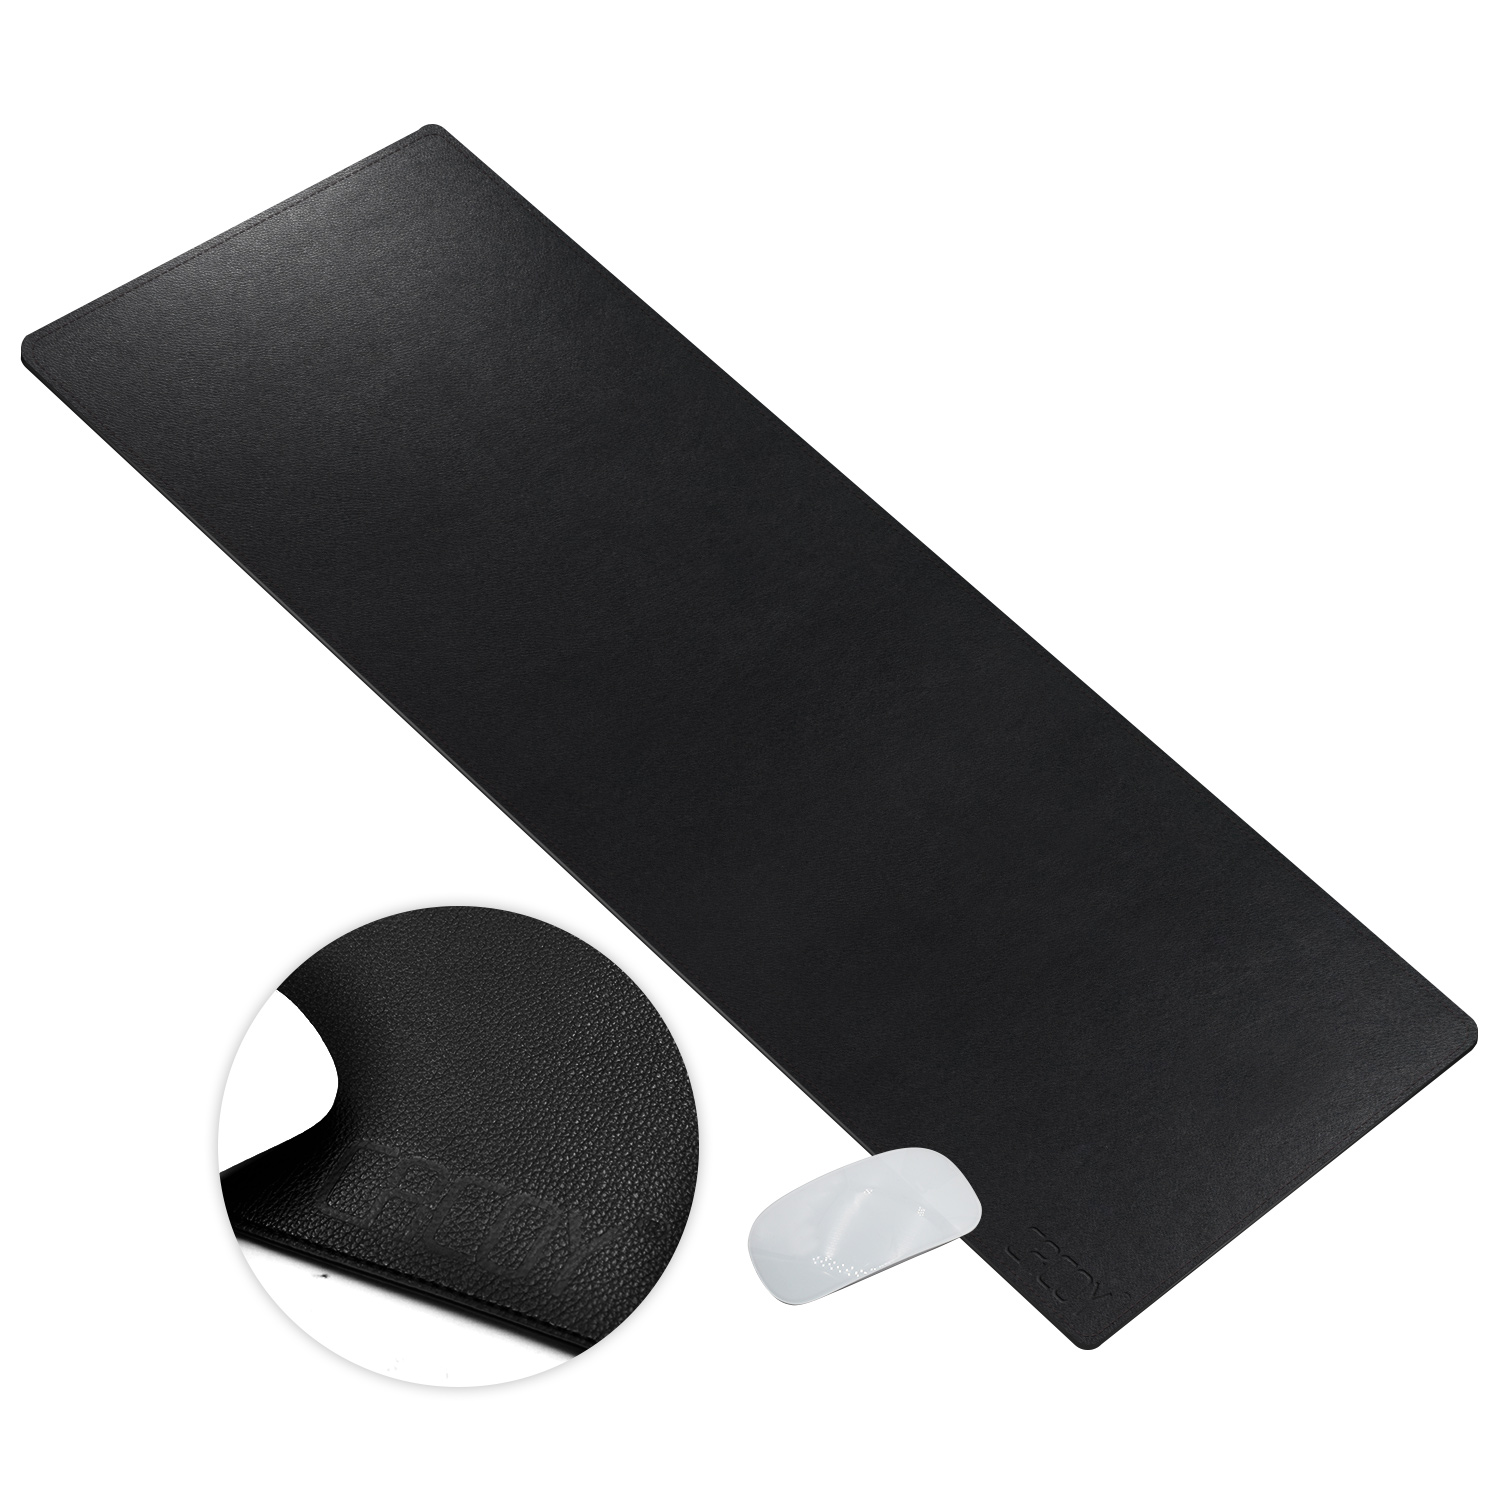 Large Artificial Leather Desk Pad - Black